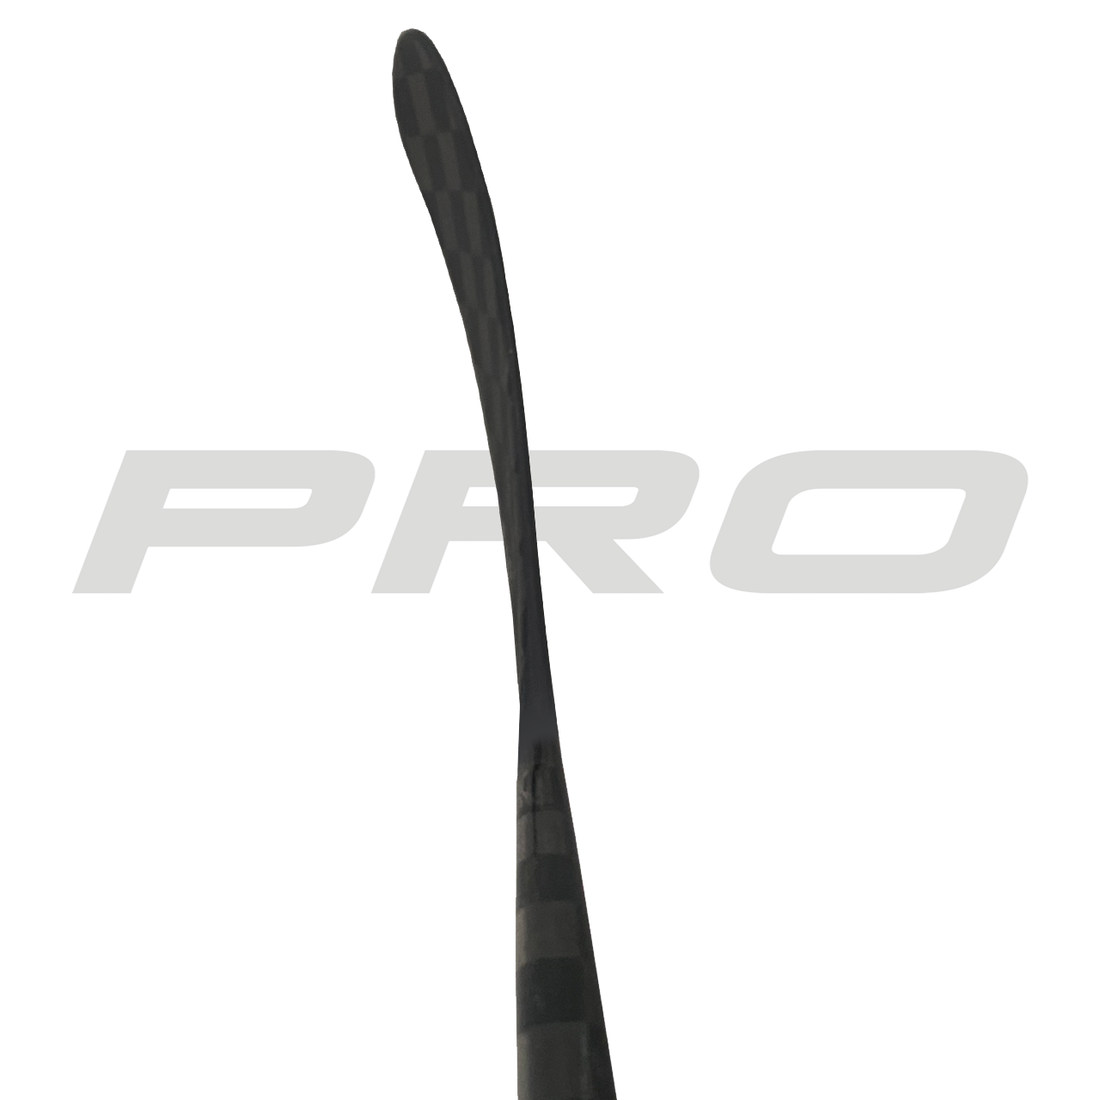 PRO1616 (ST: Barkov Pro) - Third Line (425 G) - Pro Stock Hockey Stick - Right